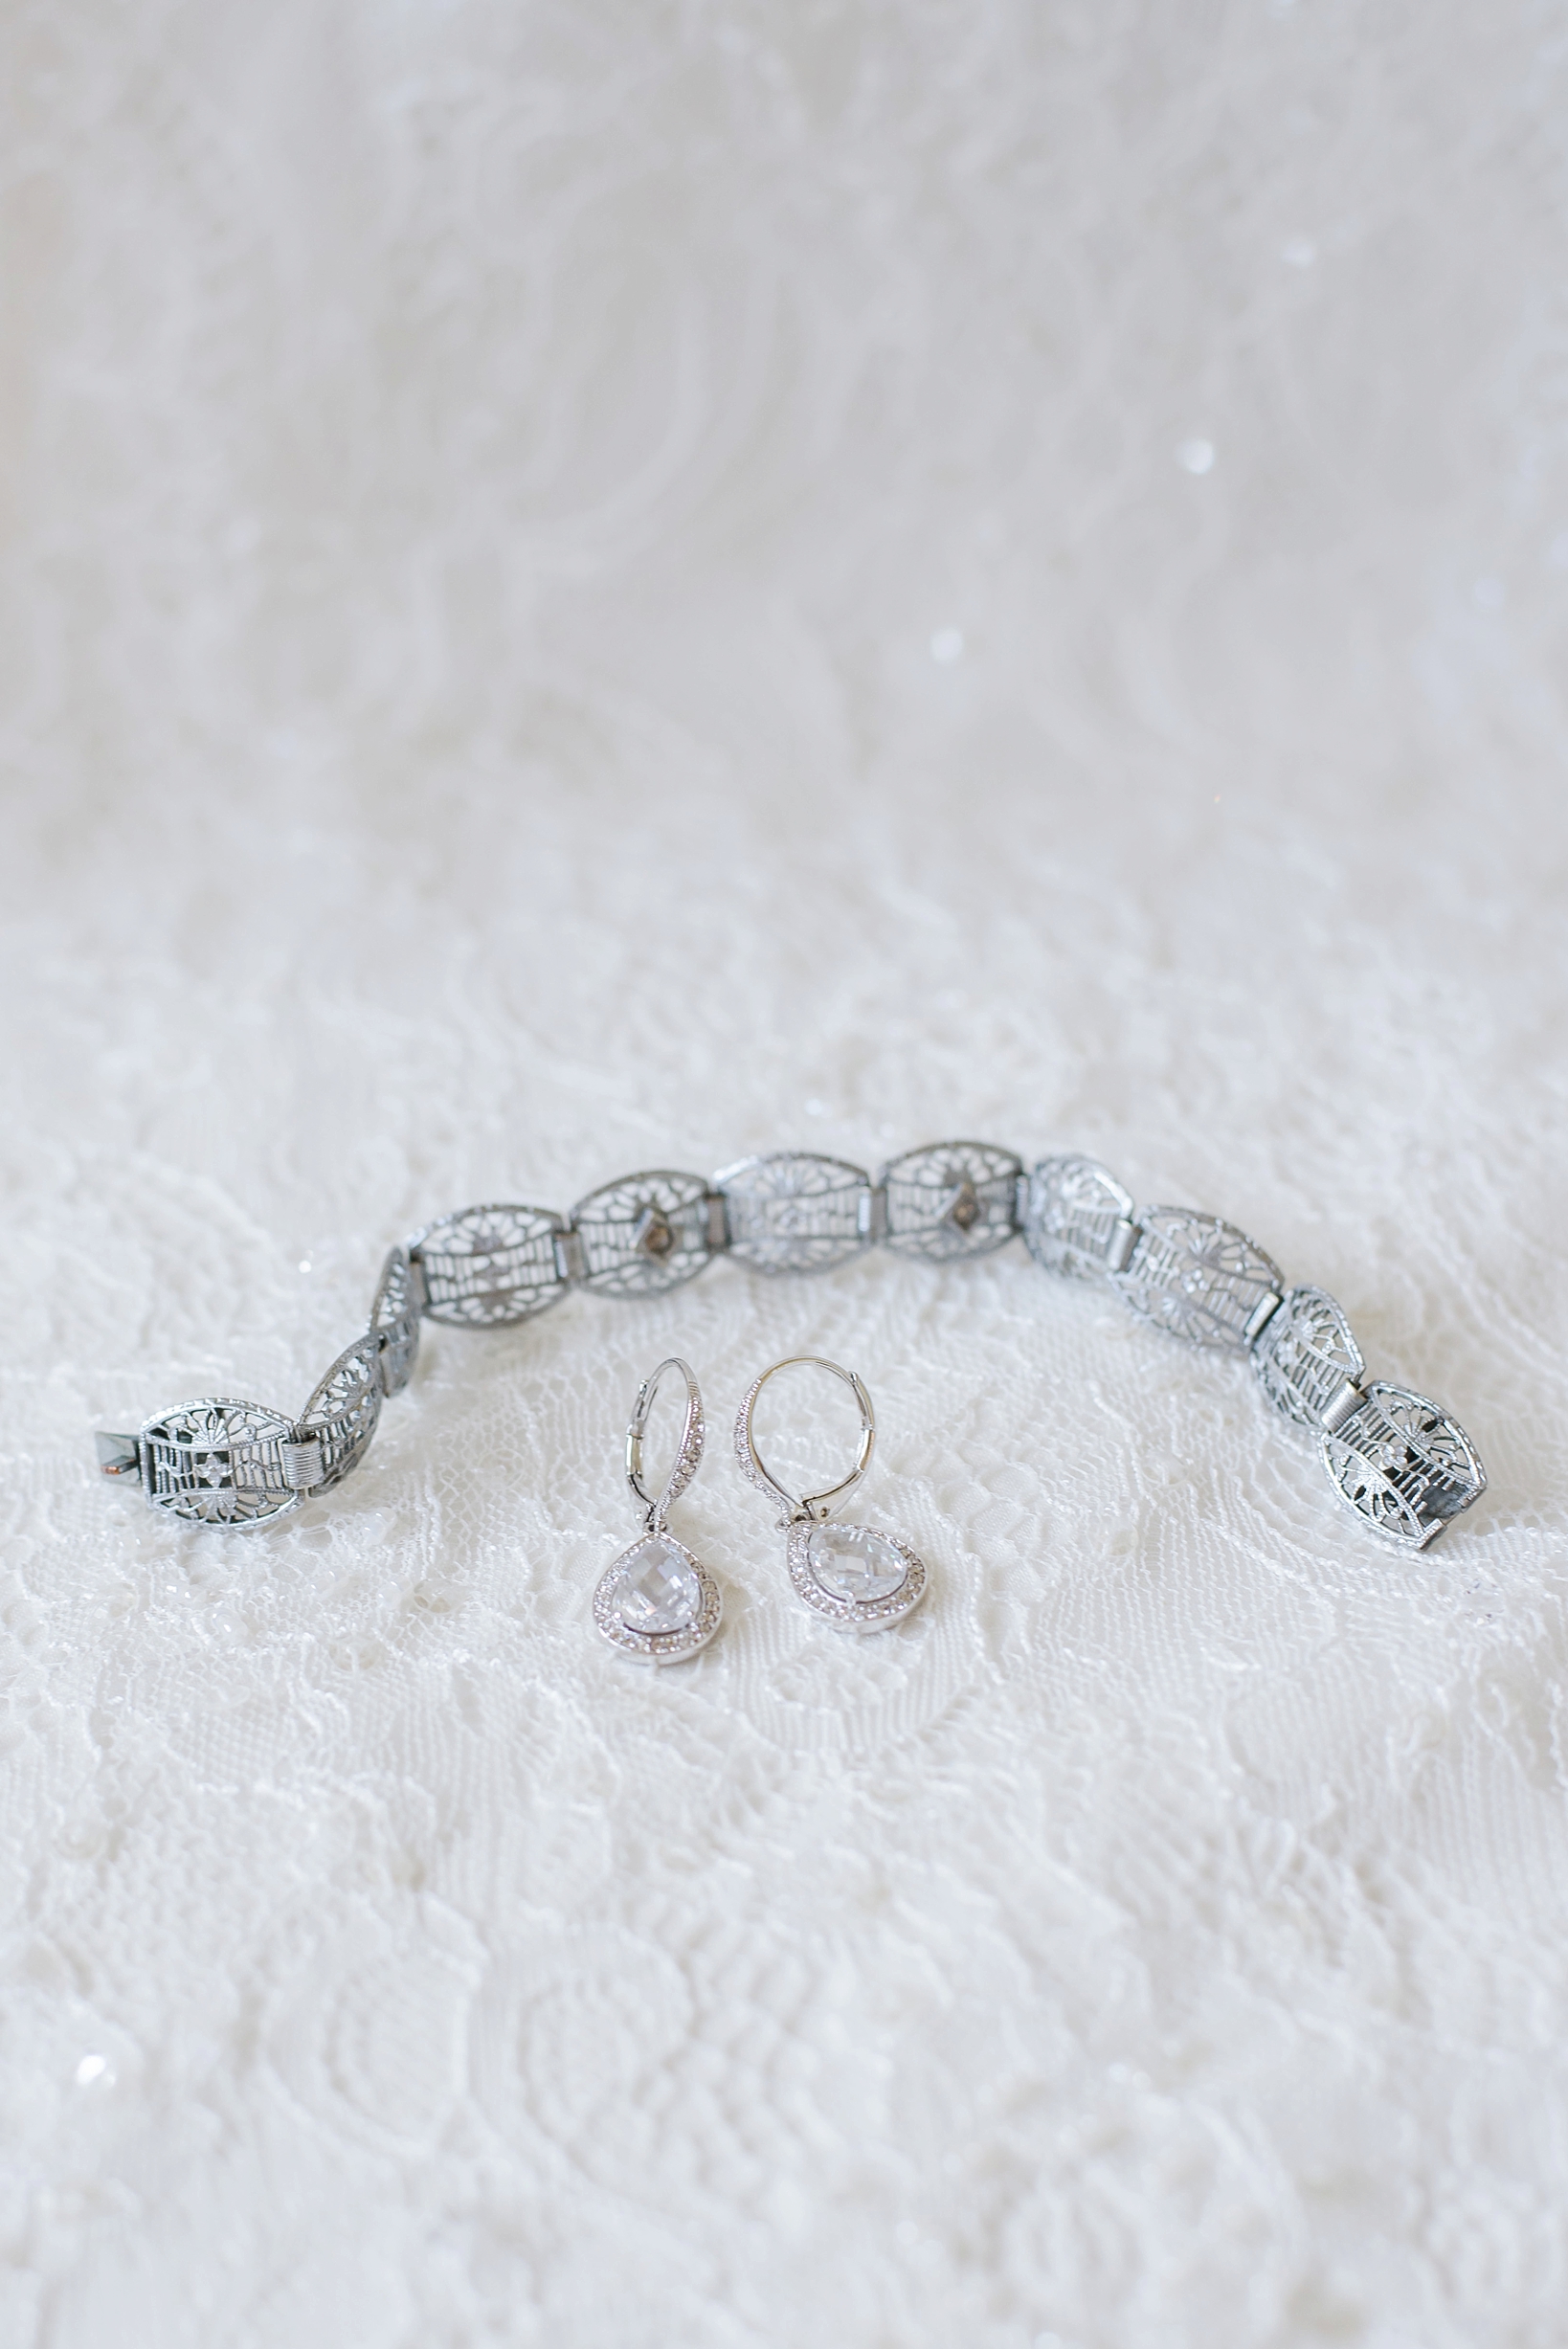 Bride's bracelet and earrings on a lace backdrop